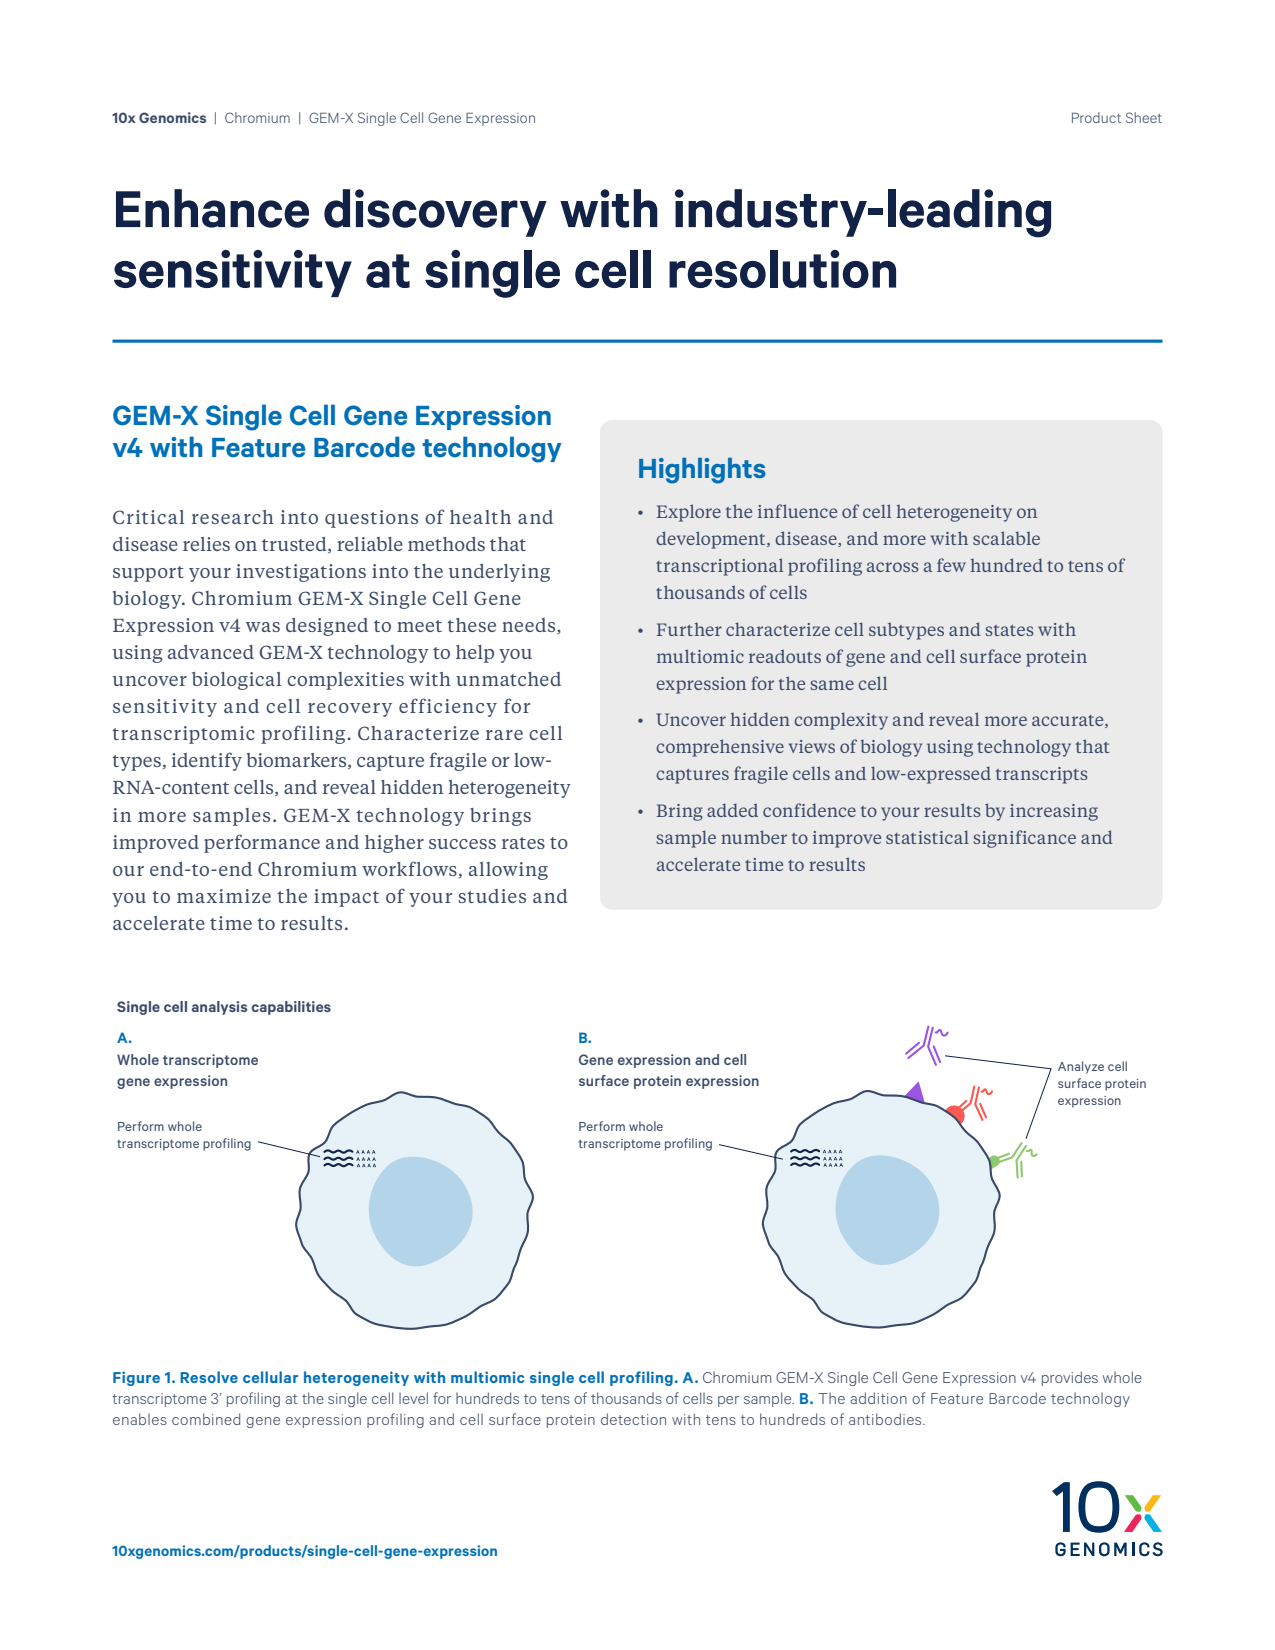 GEM-X Single Cell Gene Expression v4 Product Sheet